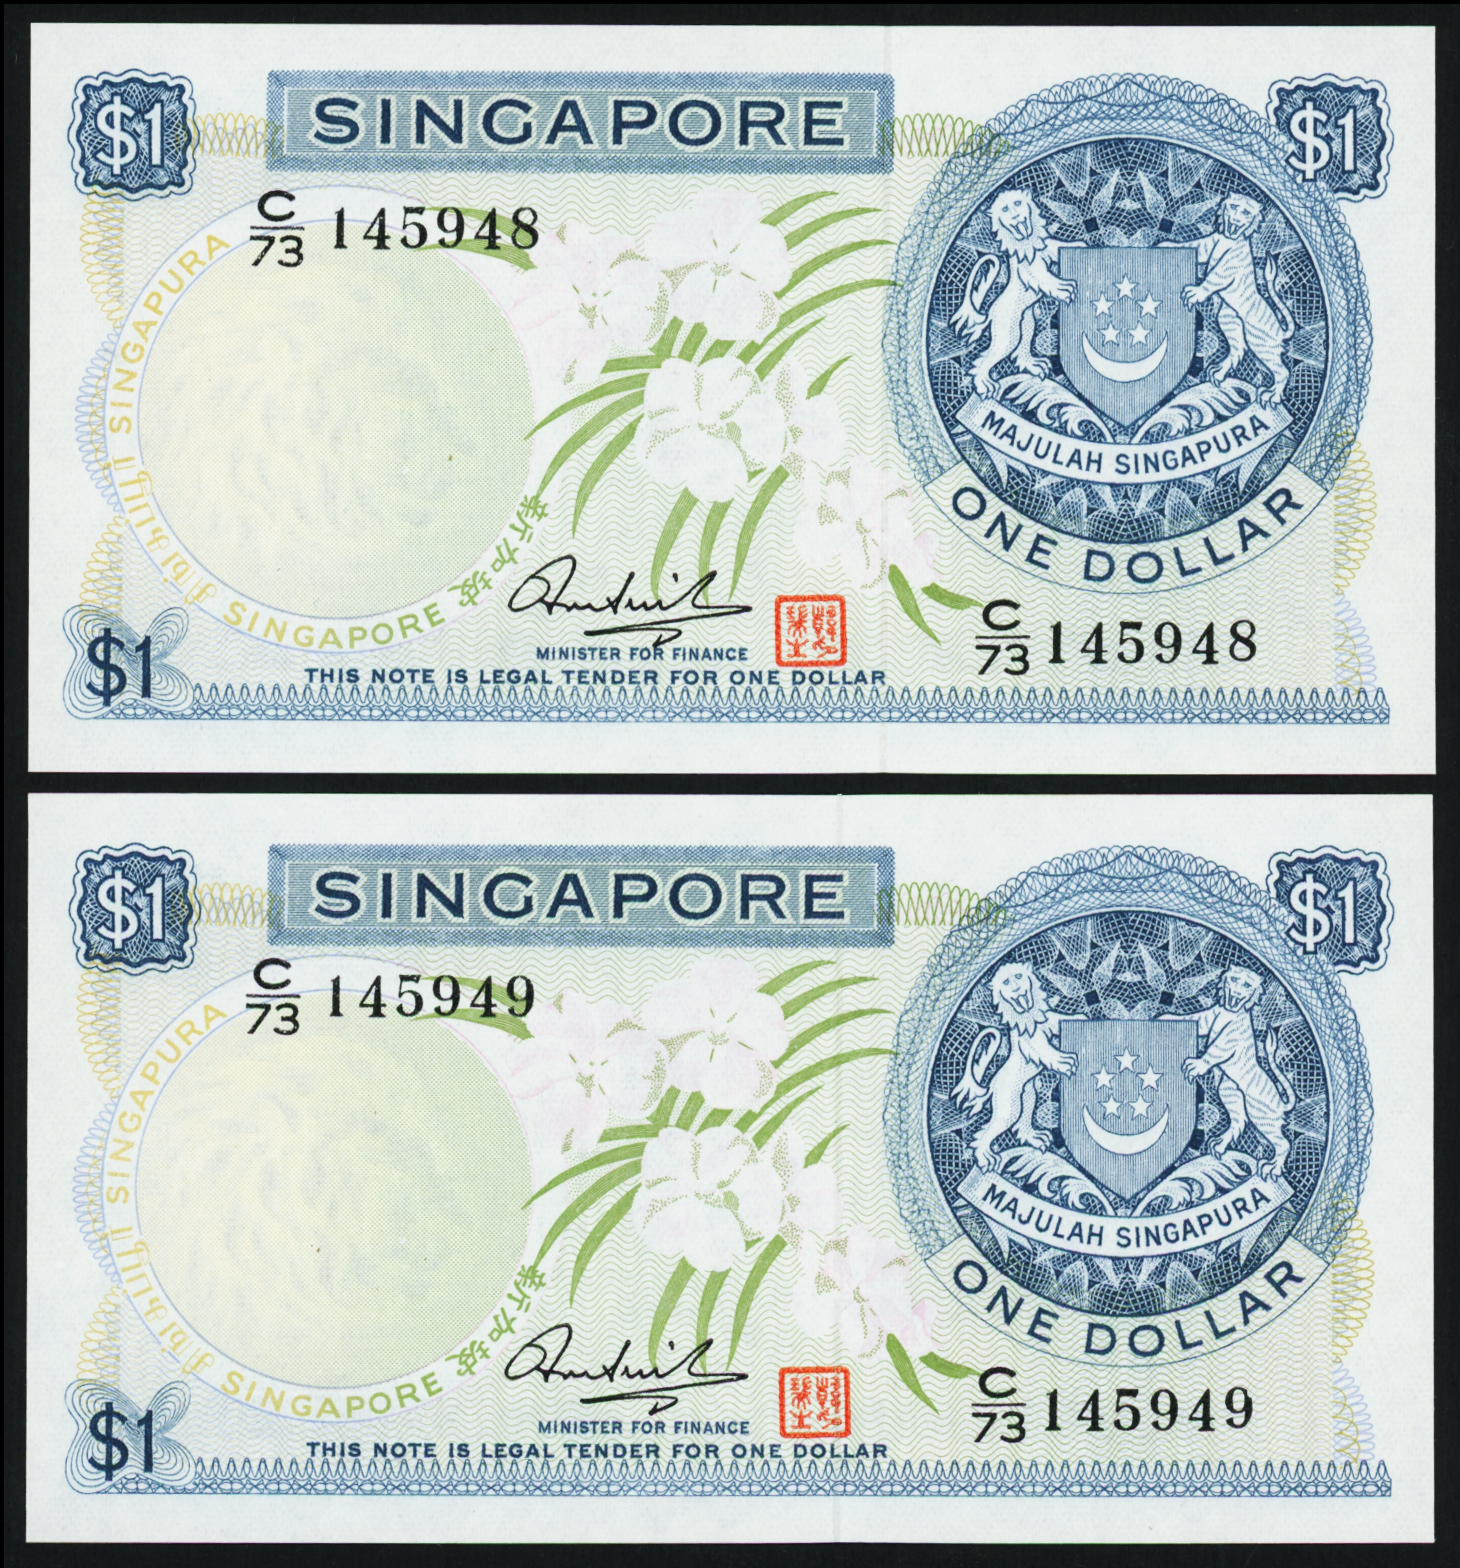 Singapore Orchid 1967 $1 Error Notes Consecutive C/73 145948-49 